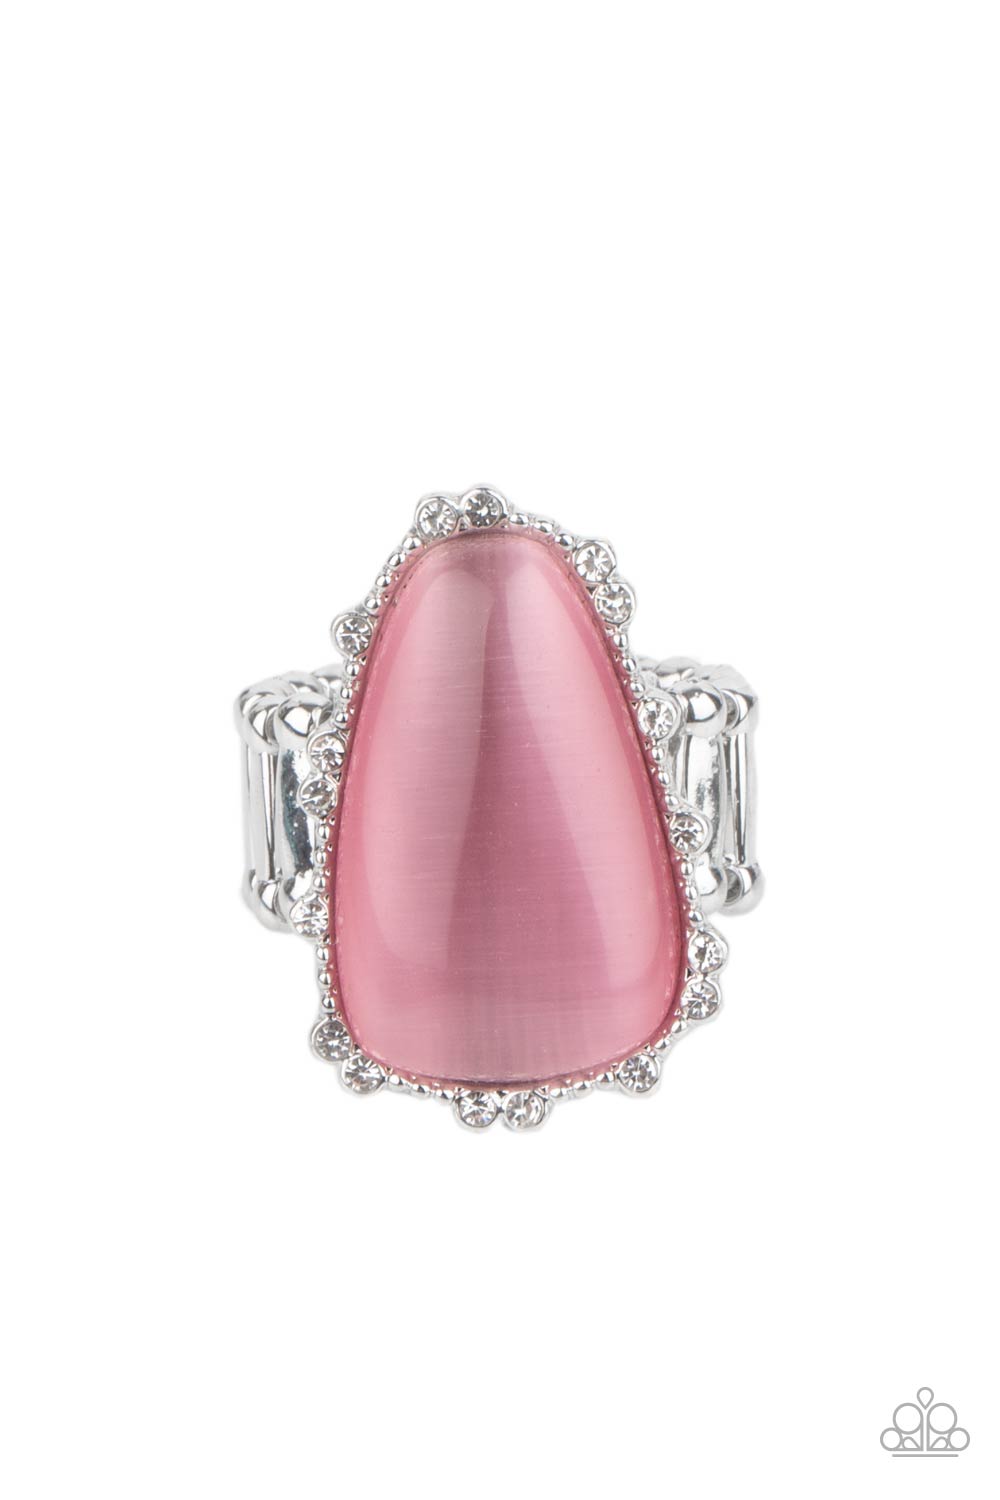 Paparazzi Accessories Newport Nouveau - Pink Rings - Lady T Accessories